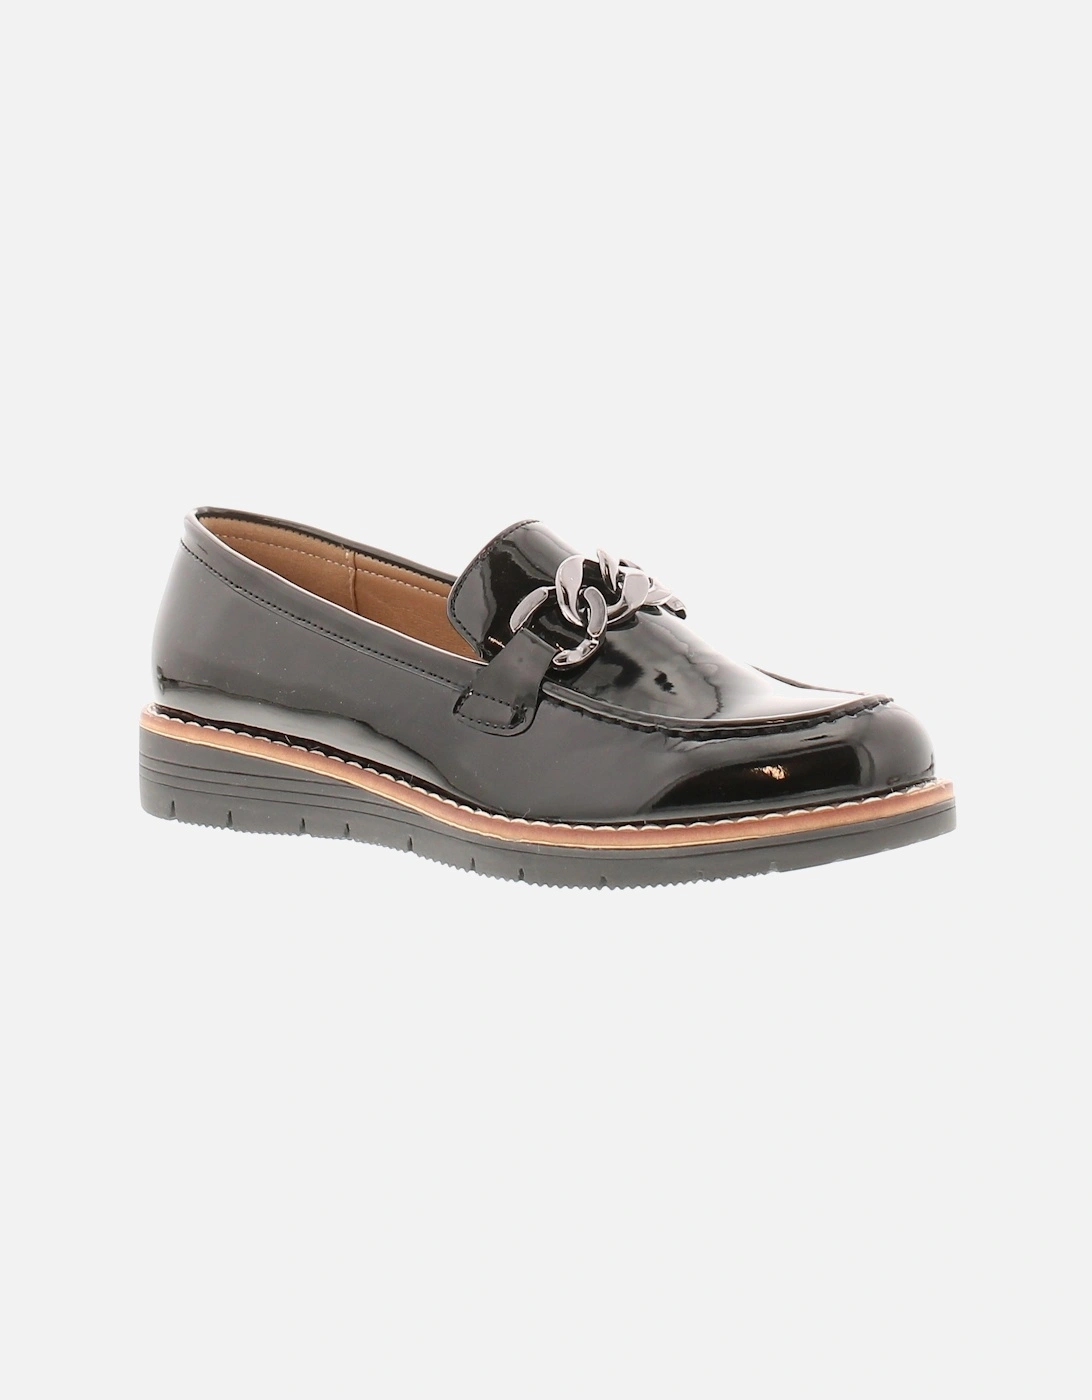 Womens Flat Shoes Loafers Ledge Slip On black UK Size, 6 of 5